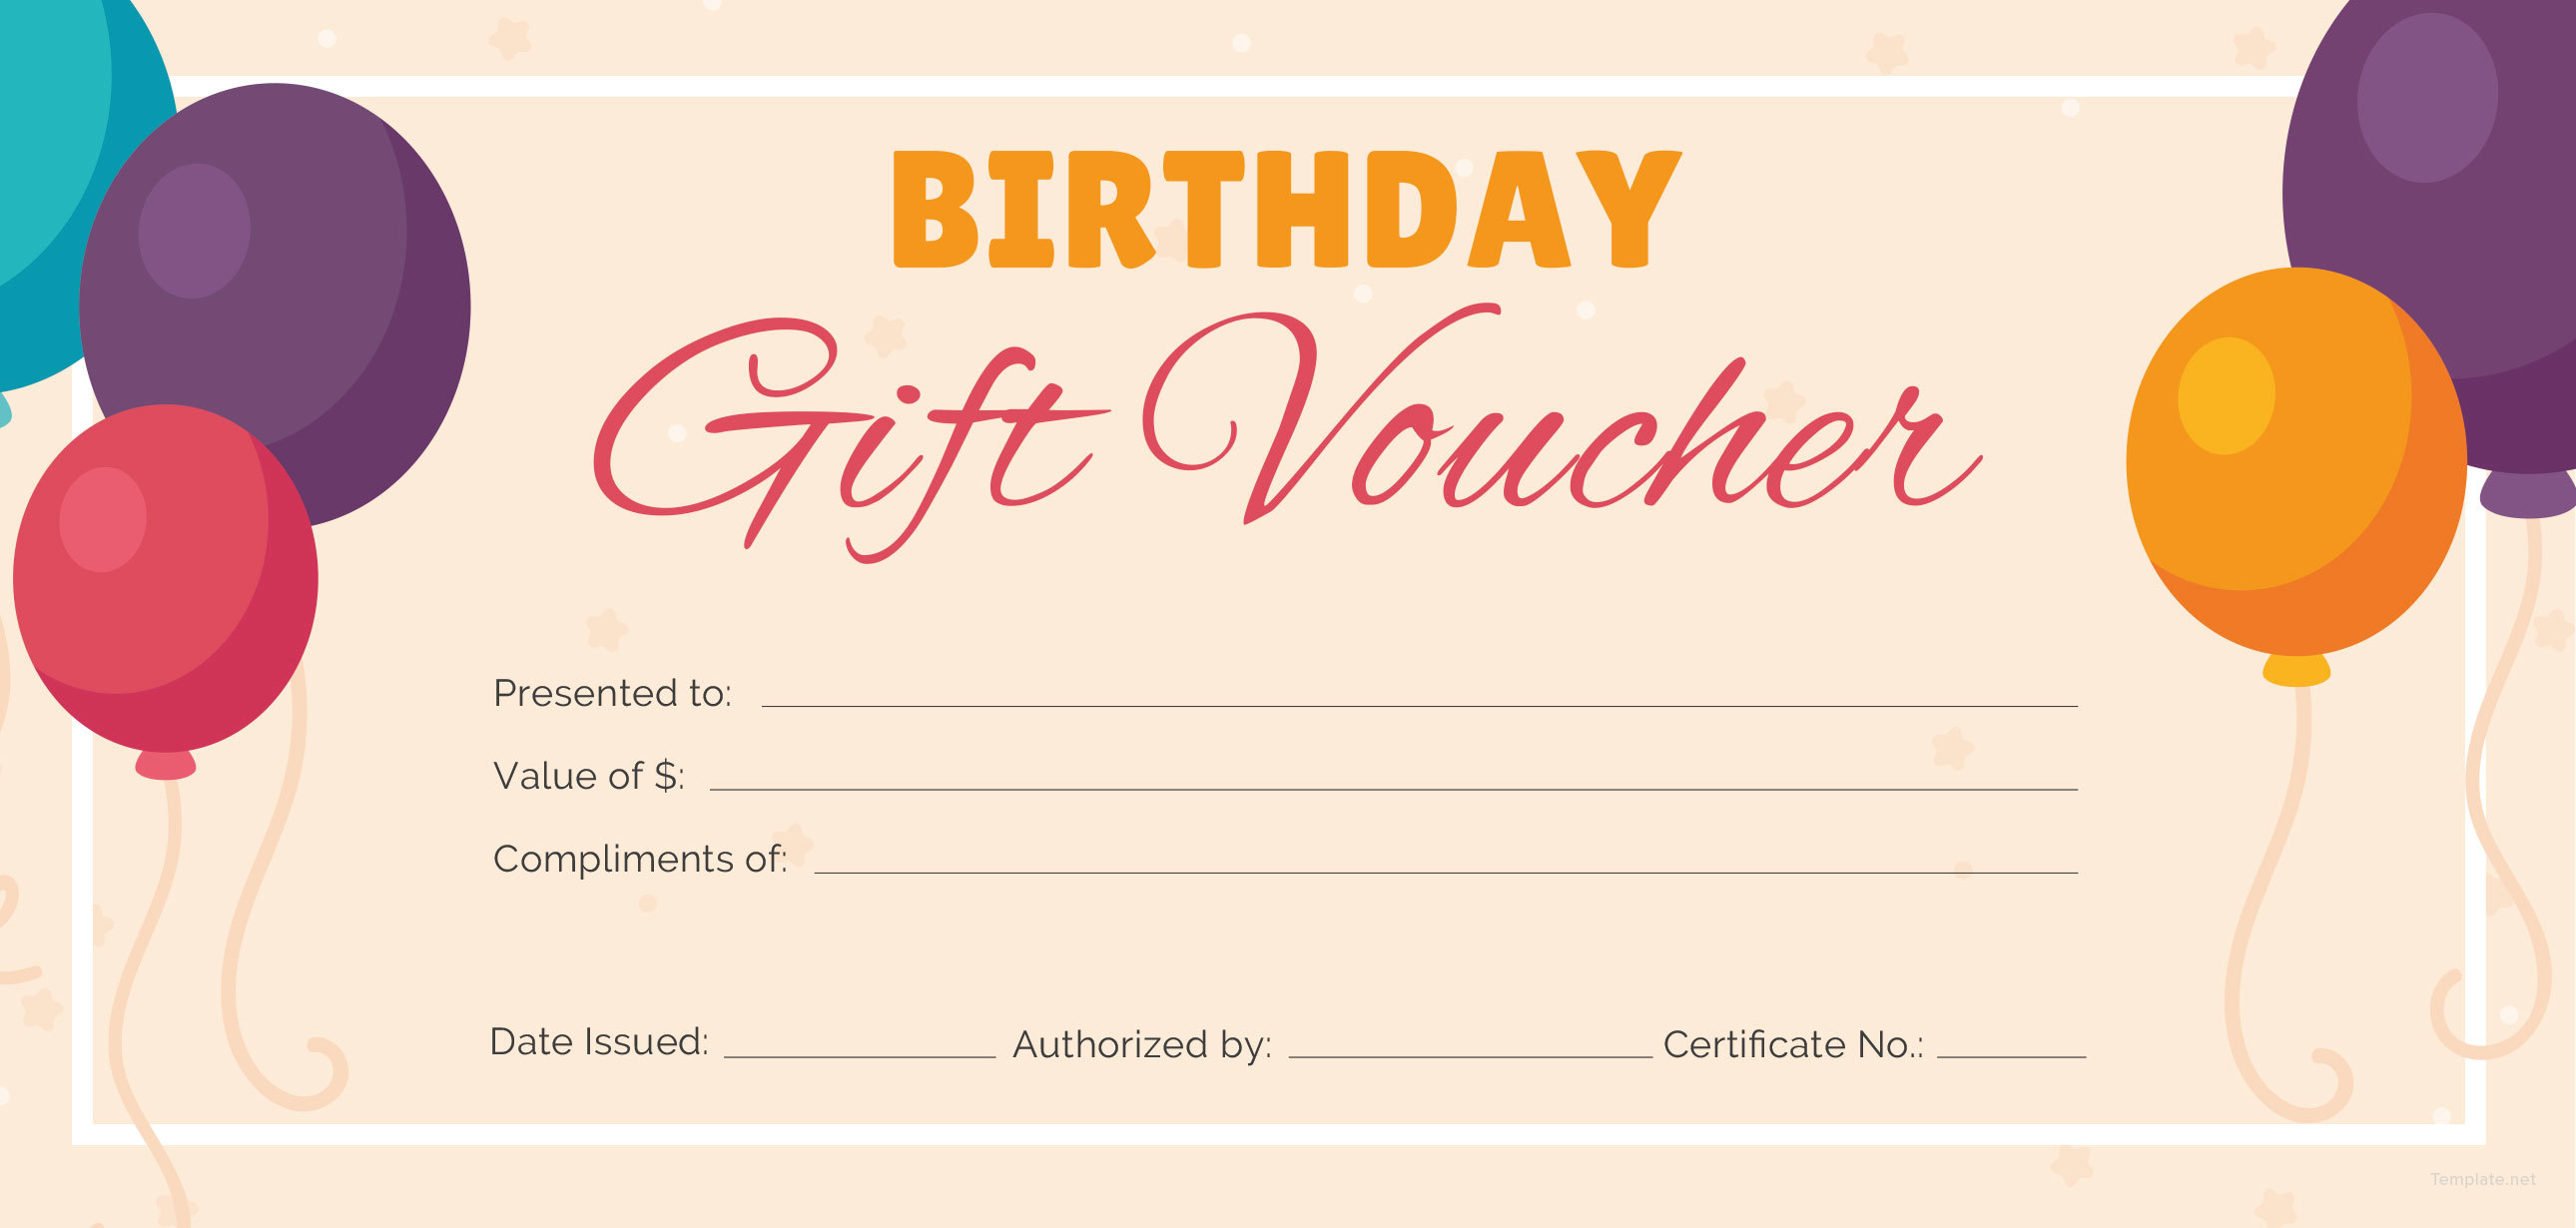 Free Birthday Gift Voucher Template In Adobe Photoshop Illustrator Microsoft Word Publisher 